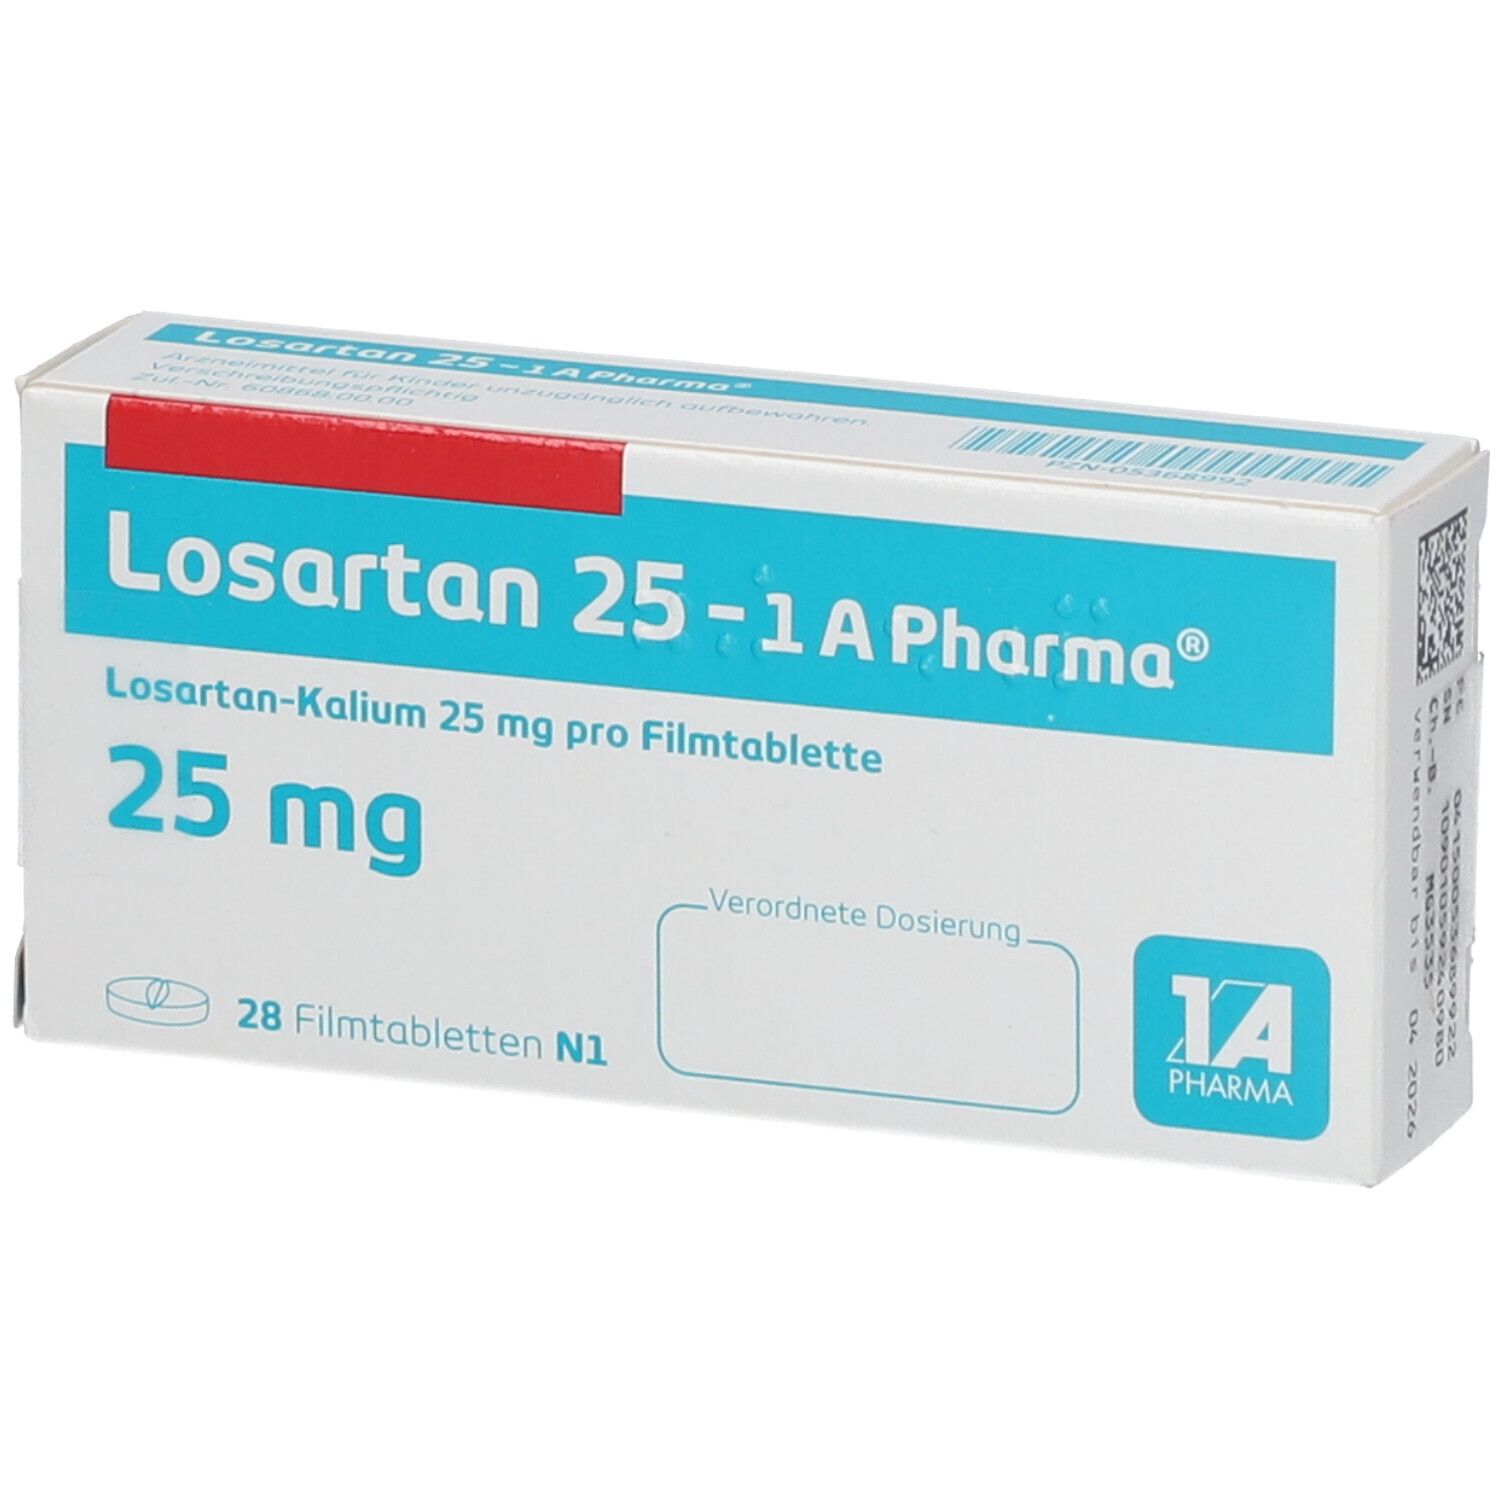 Losartan 25 - 1 A Pharma®